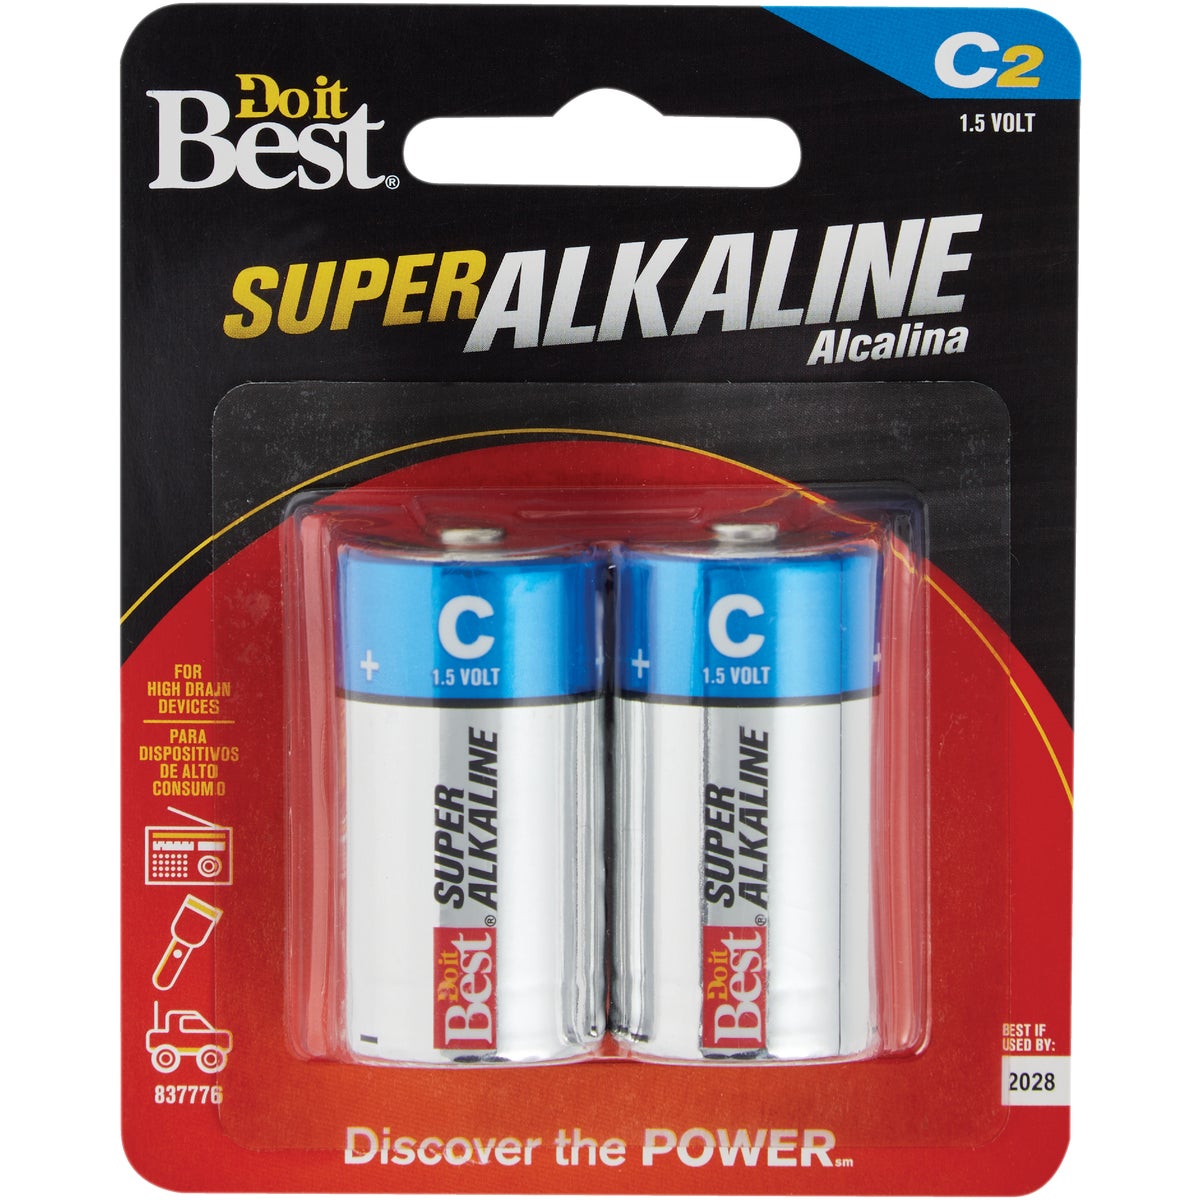 Item 837776, Top-quality C super alkaline batteries.